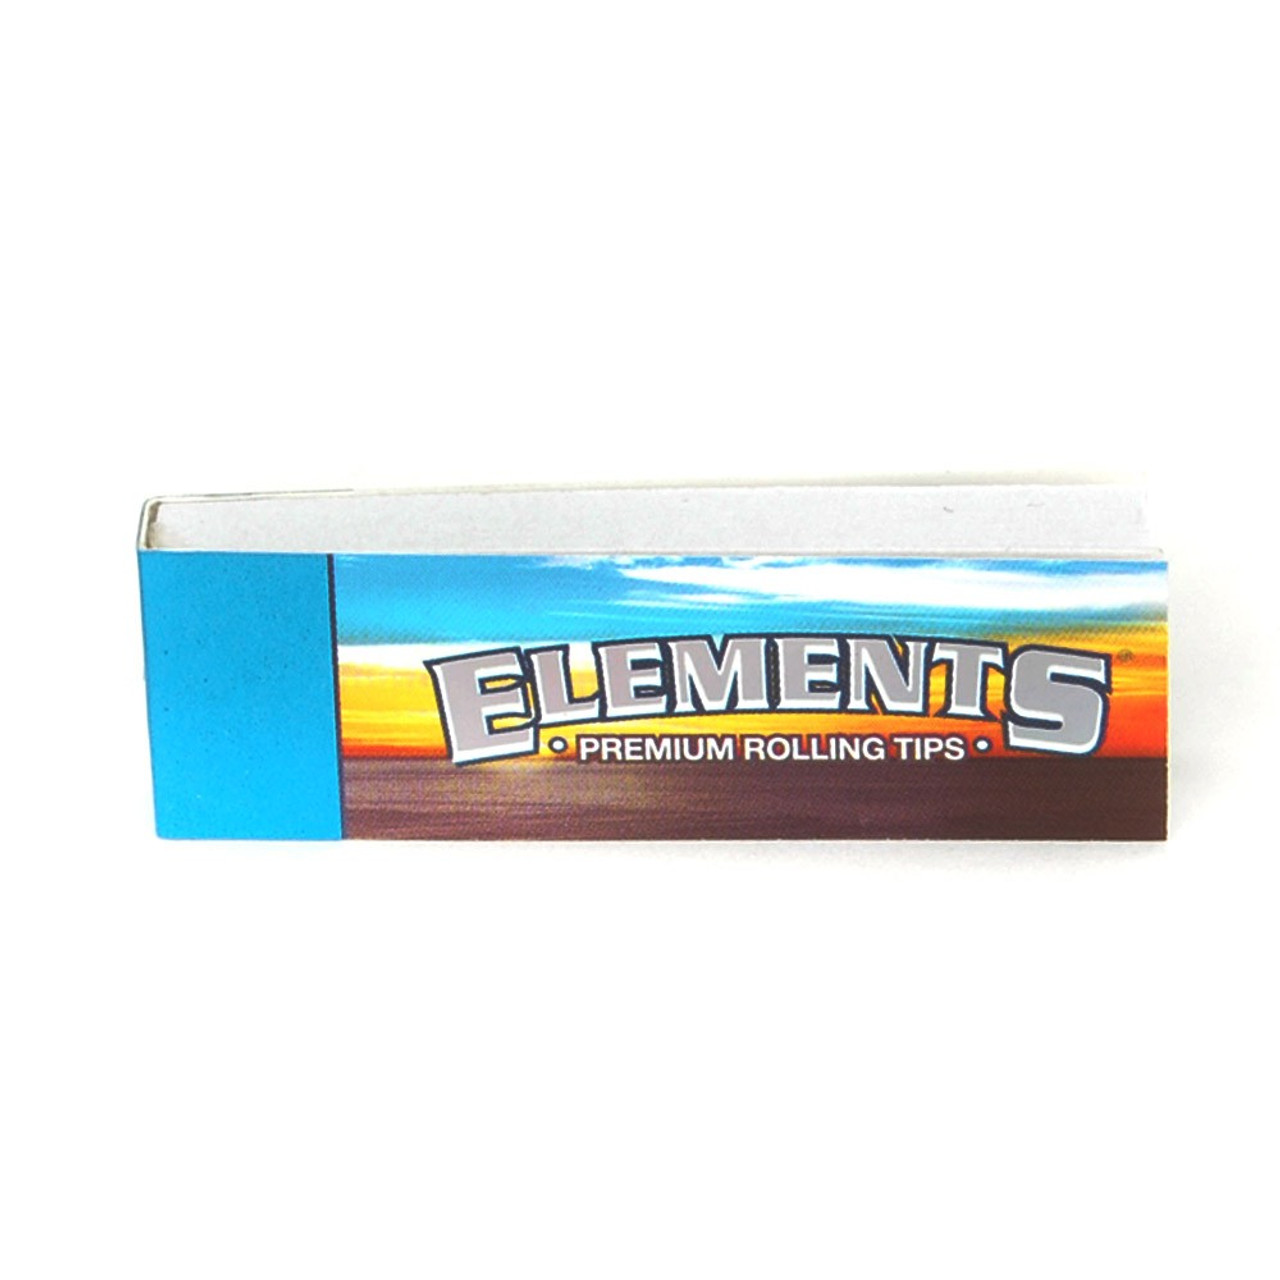 Elements Flat Paper Tips - 50 ct.